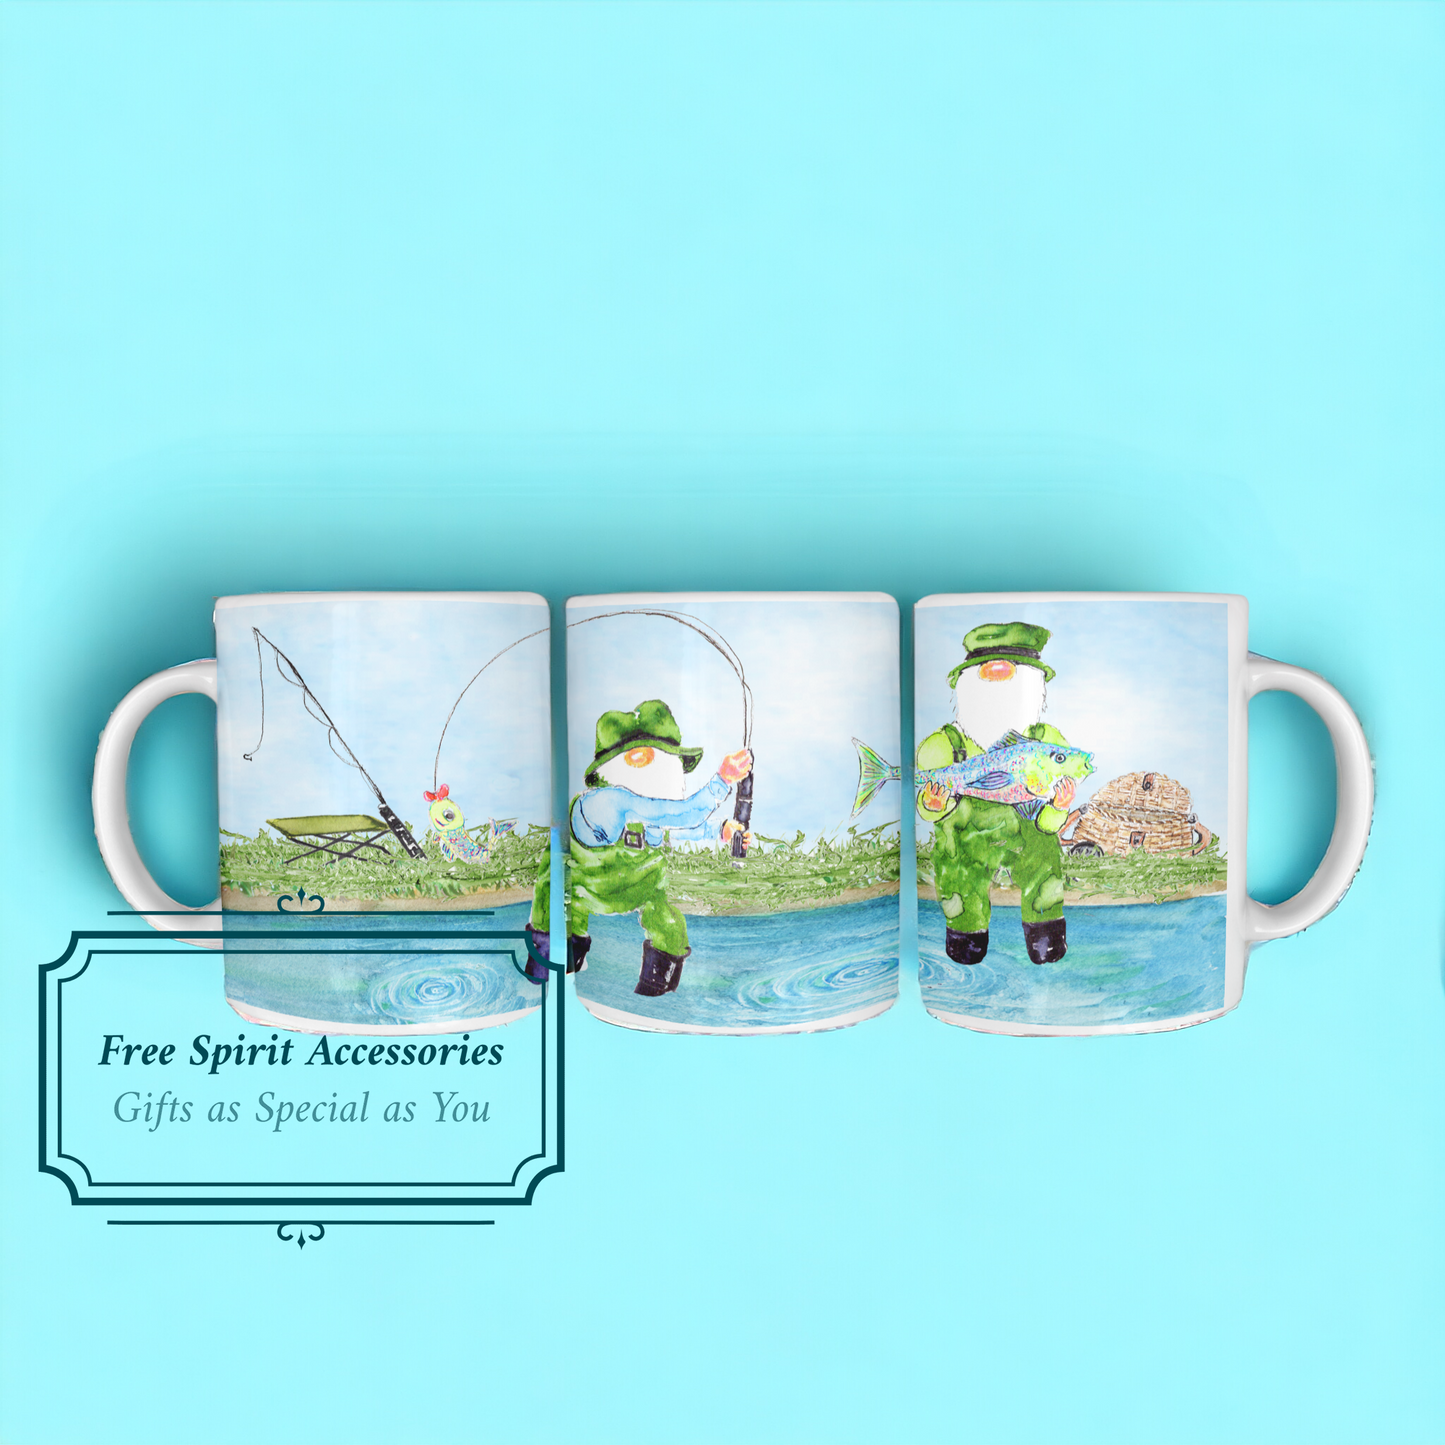  Colourful Fishing Gonks Coffee Mug by Free Spirit Accessories sold by Free Spirit Accessories